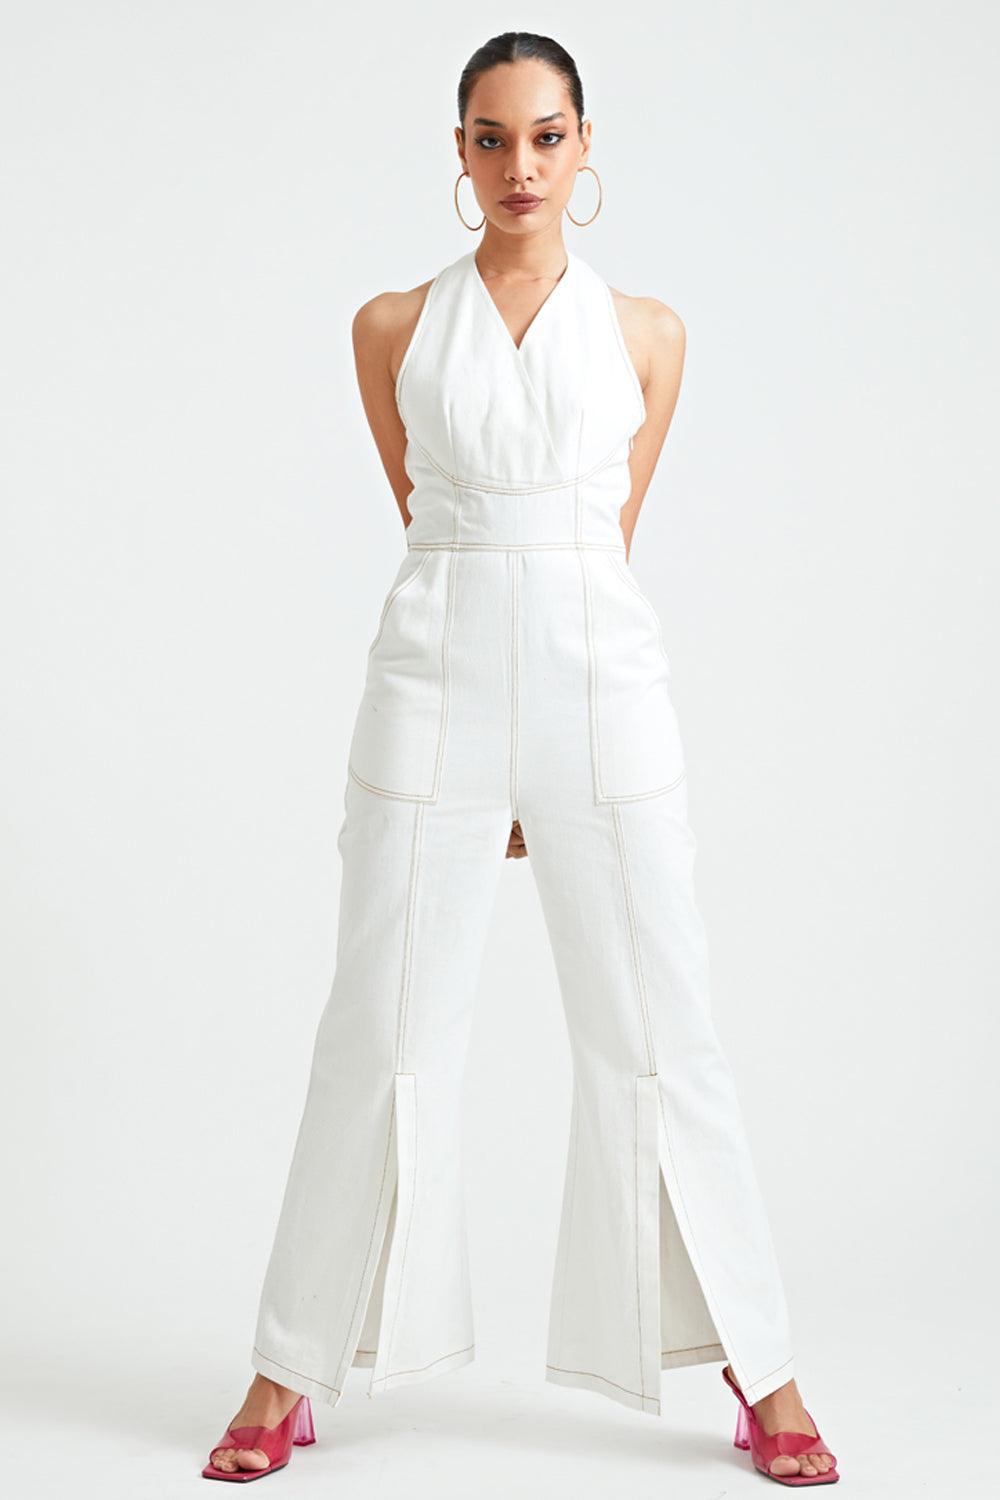 Ivory Halter Jumpsuit - ANI CLOTHING